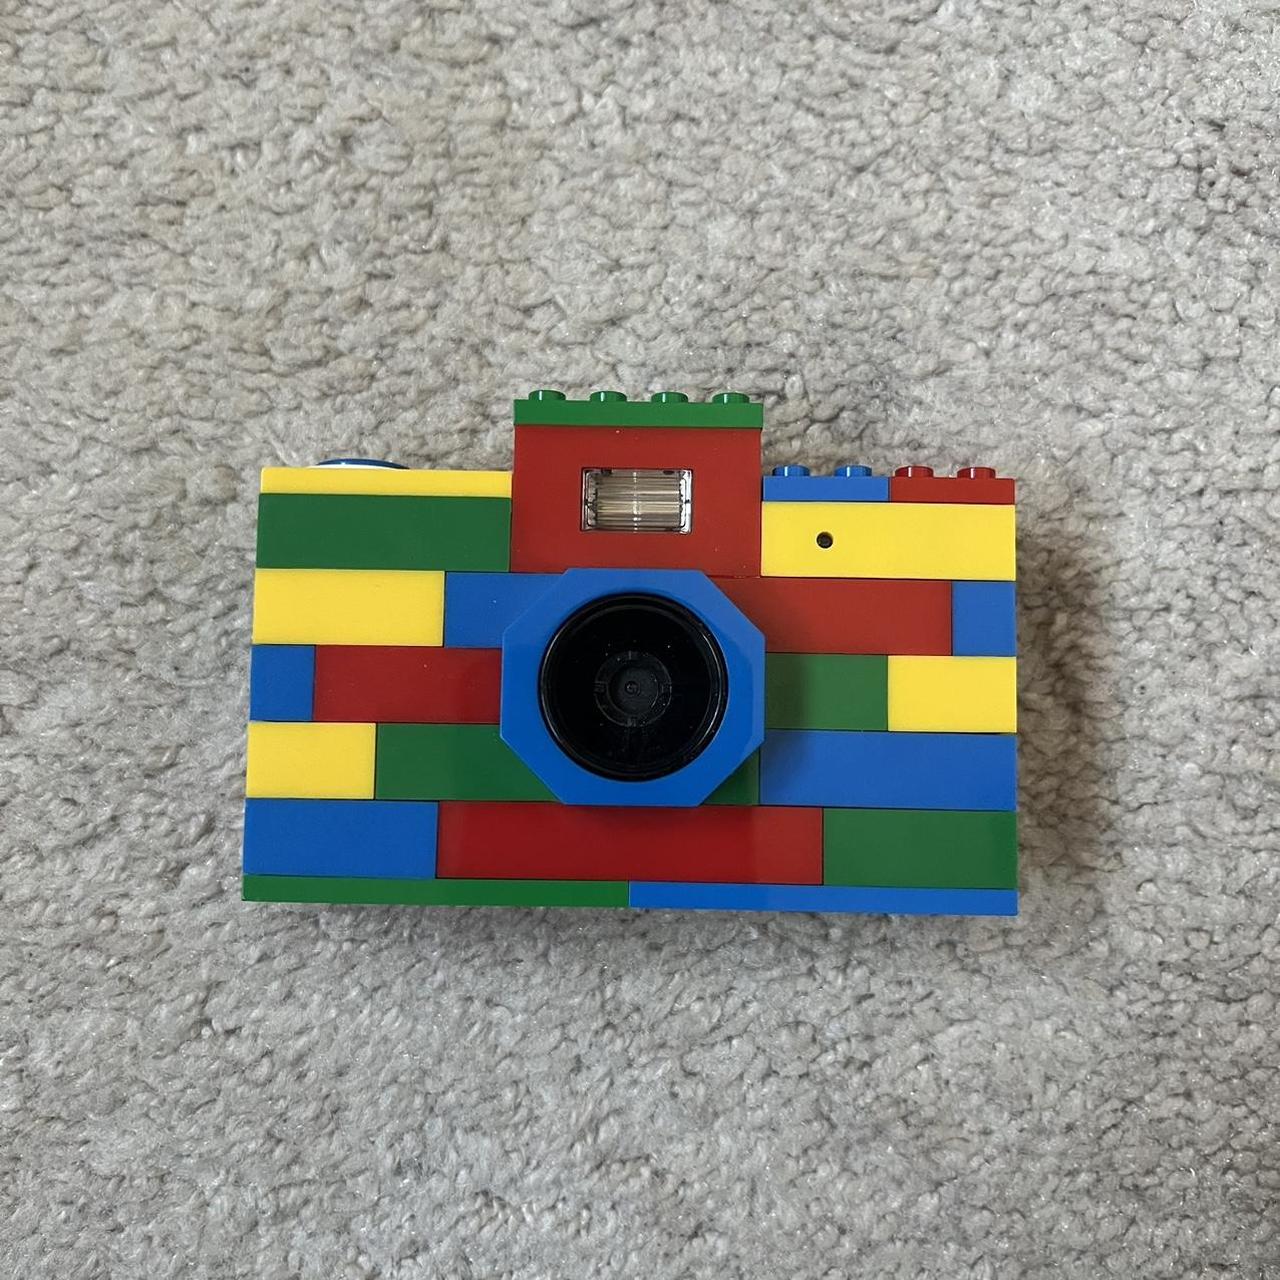 2009 Lego digital camera (functional!) Lego bricks - Depop